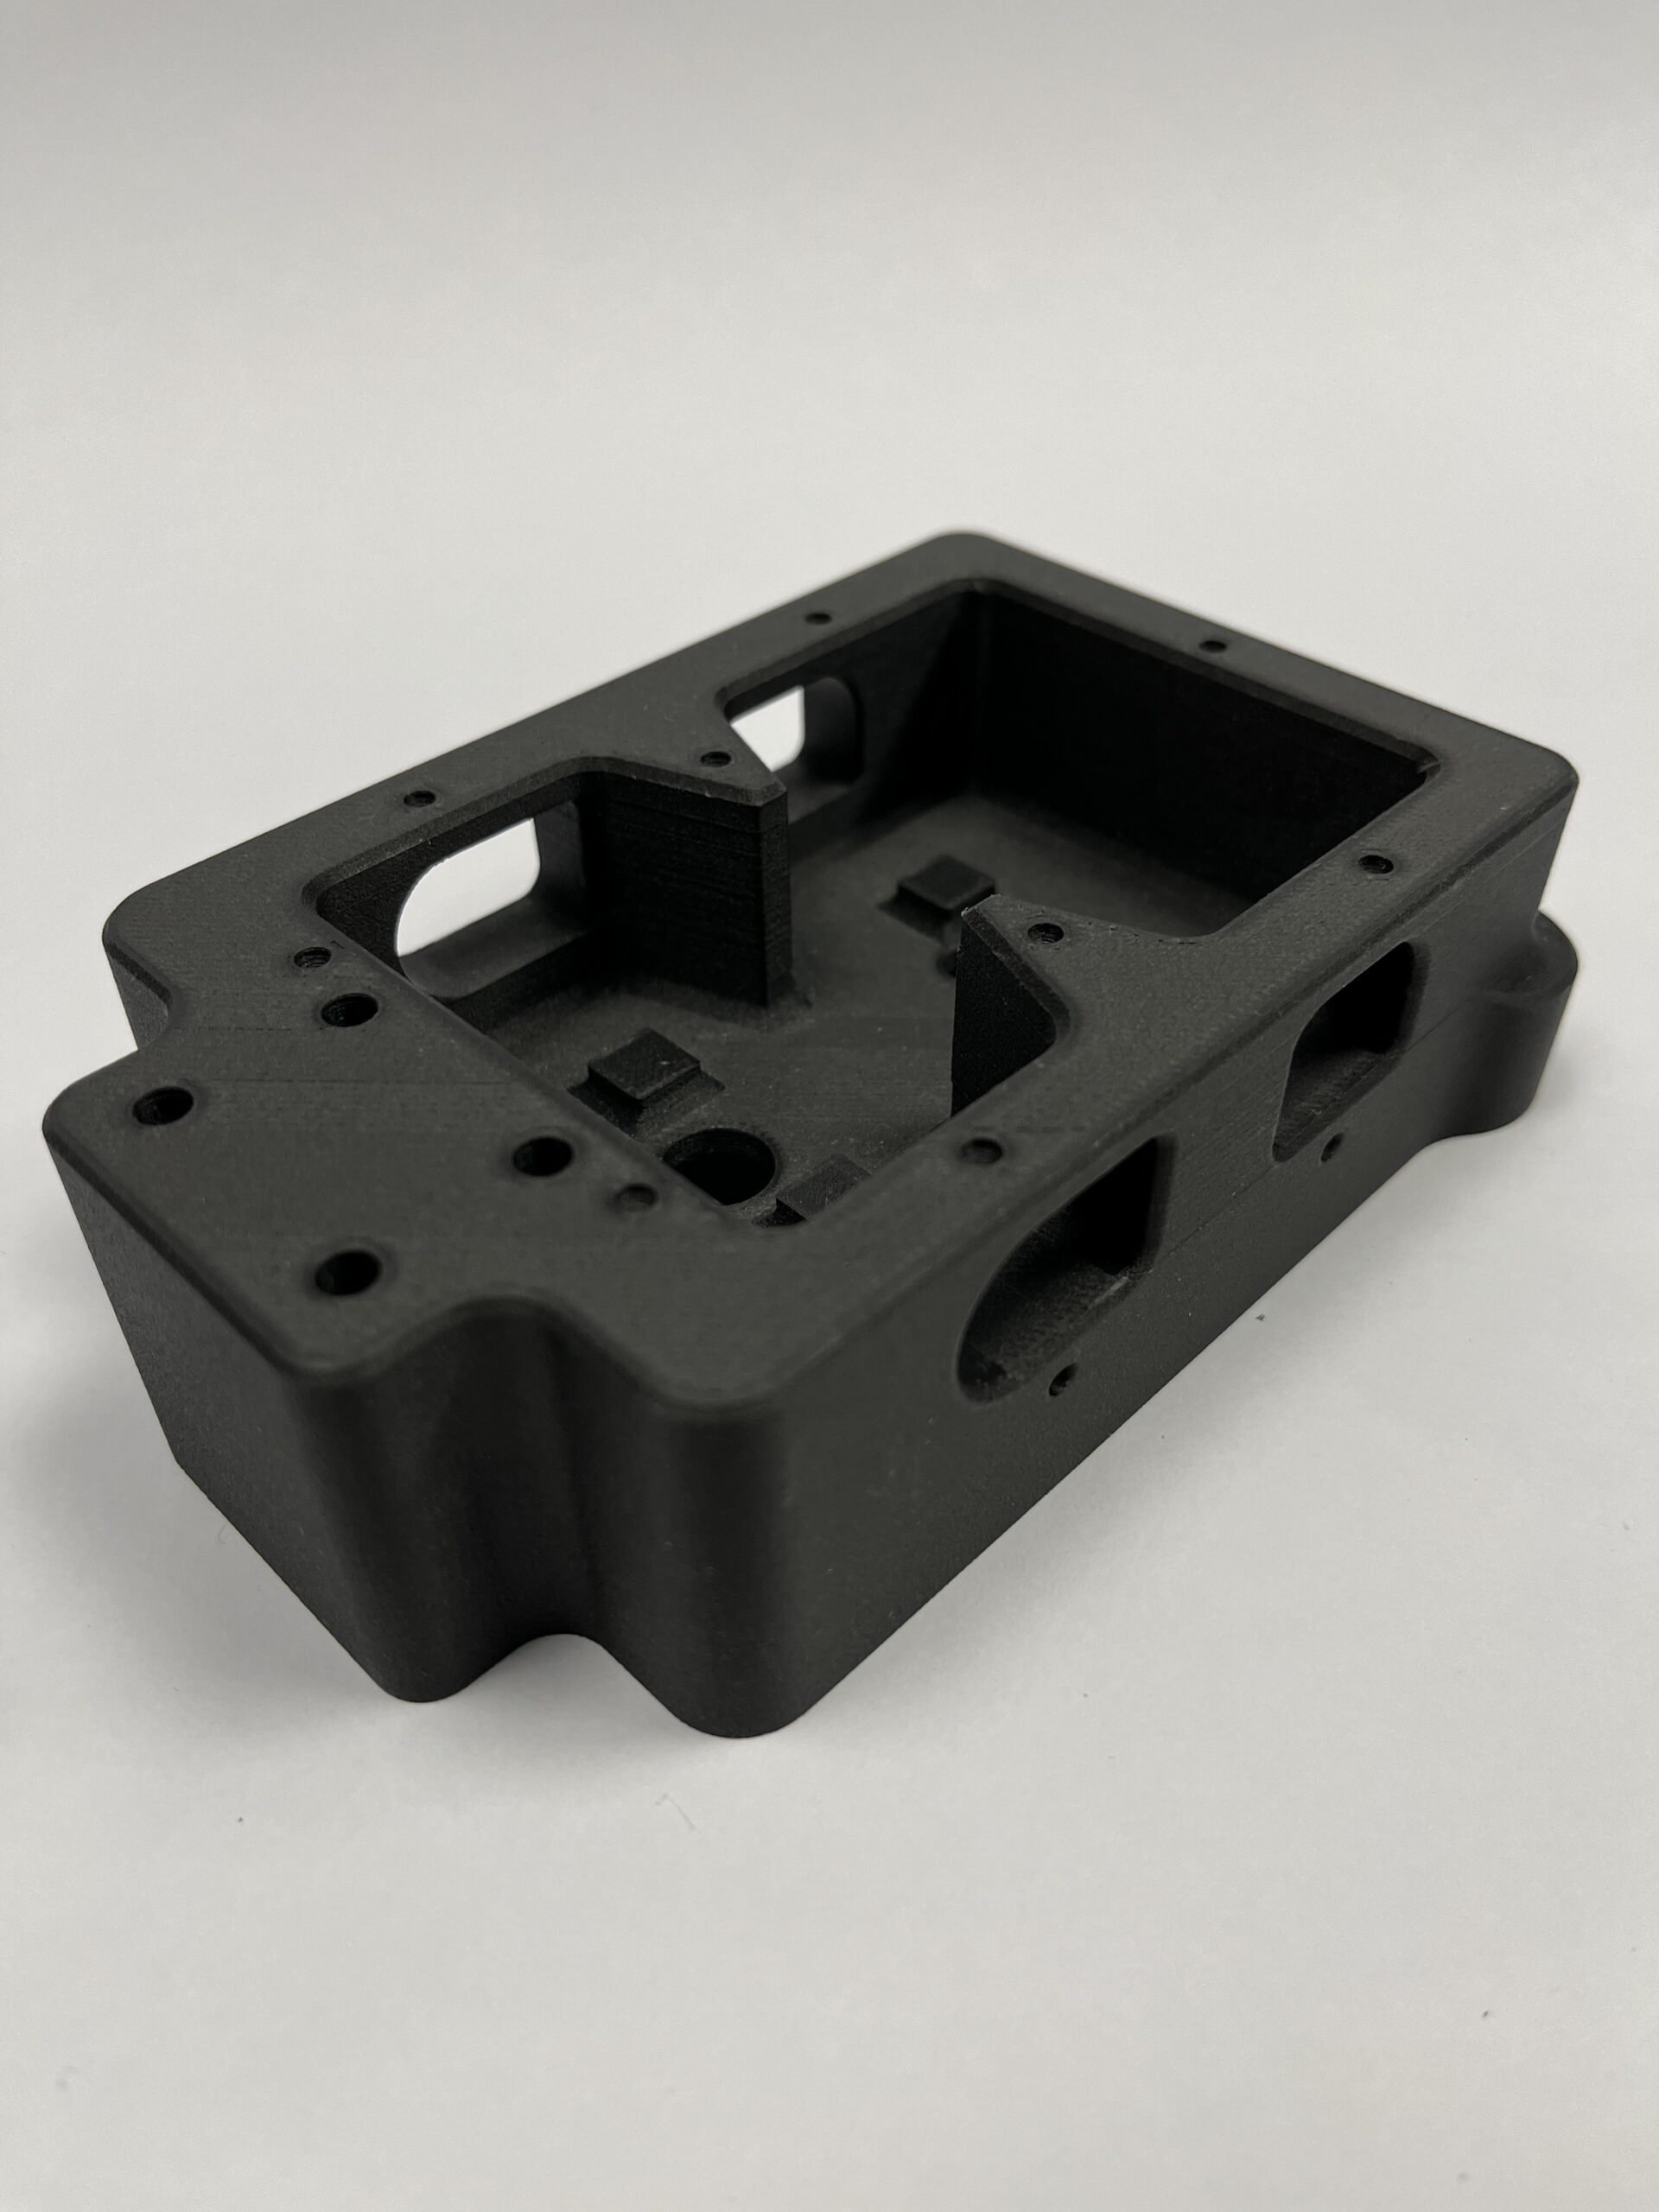 a 3D printed square black composite